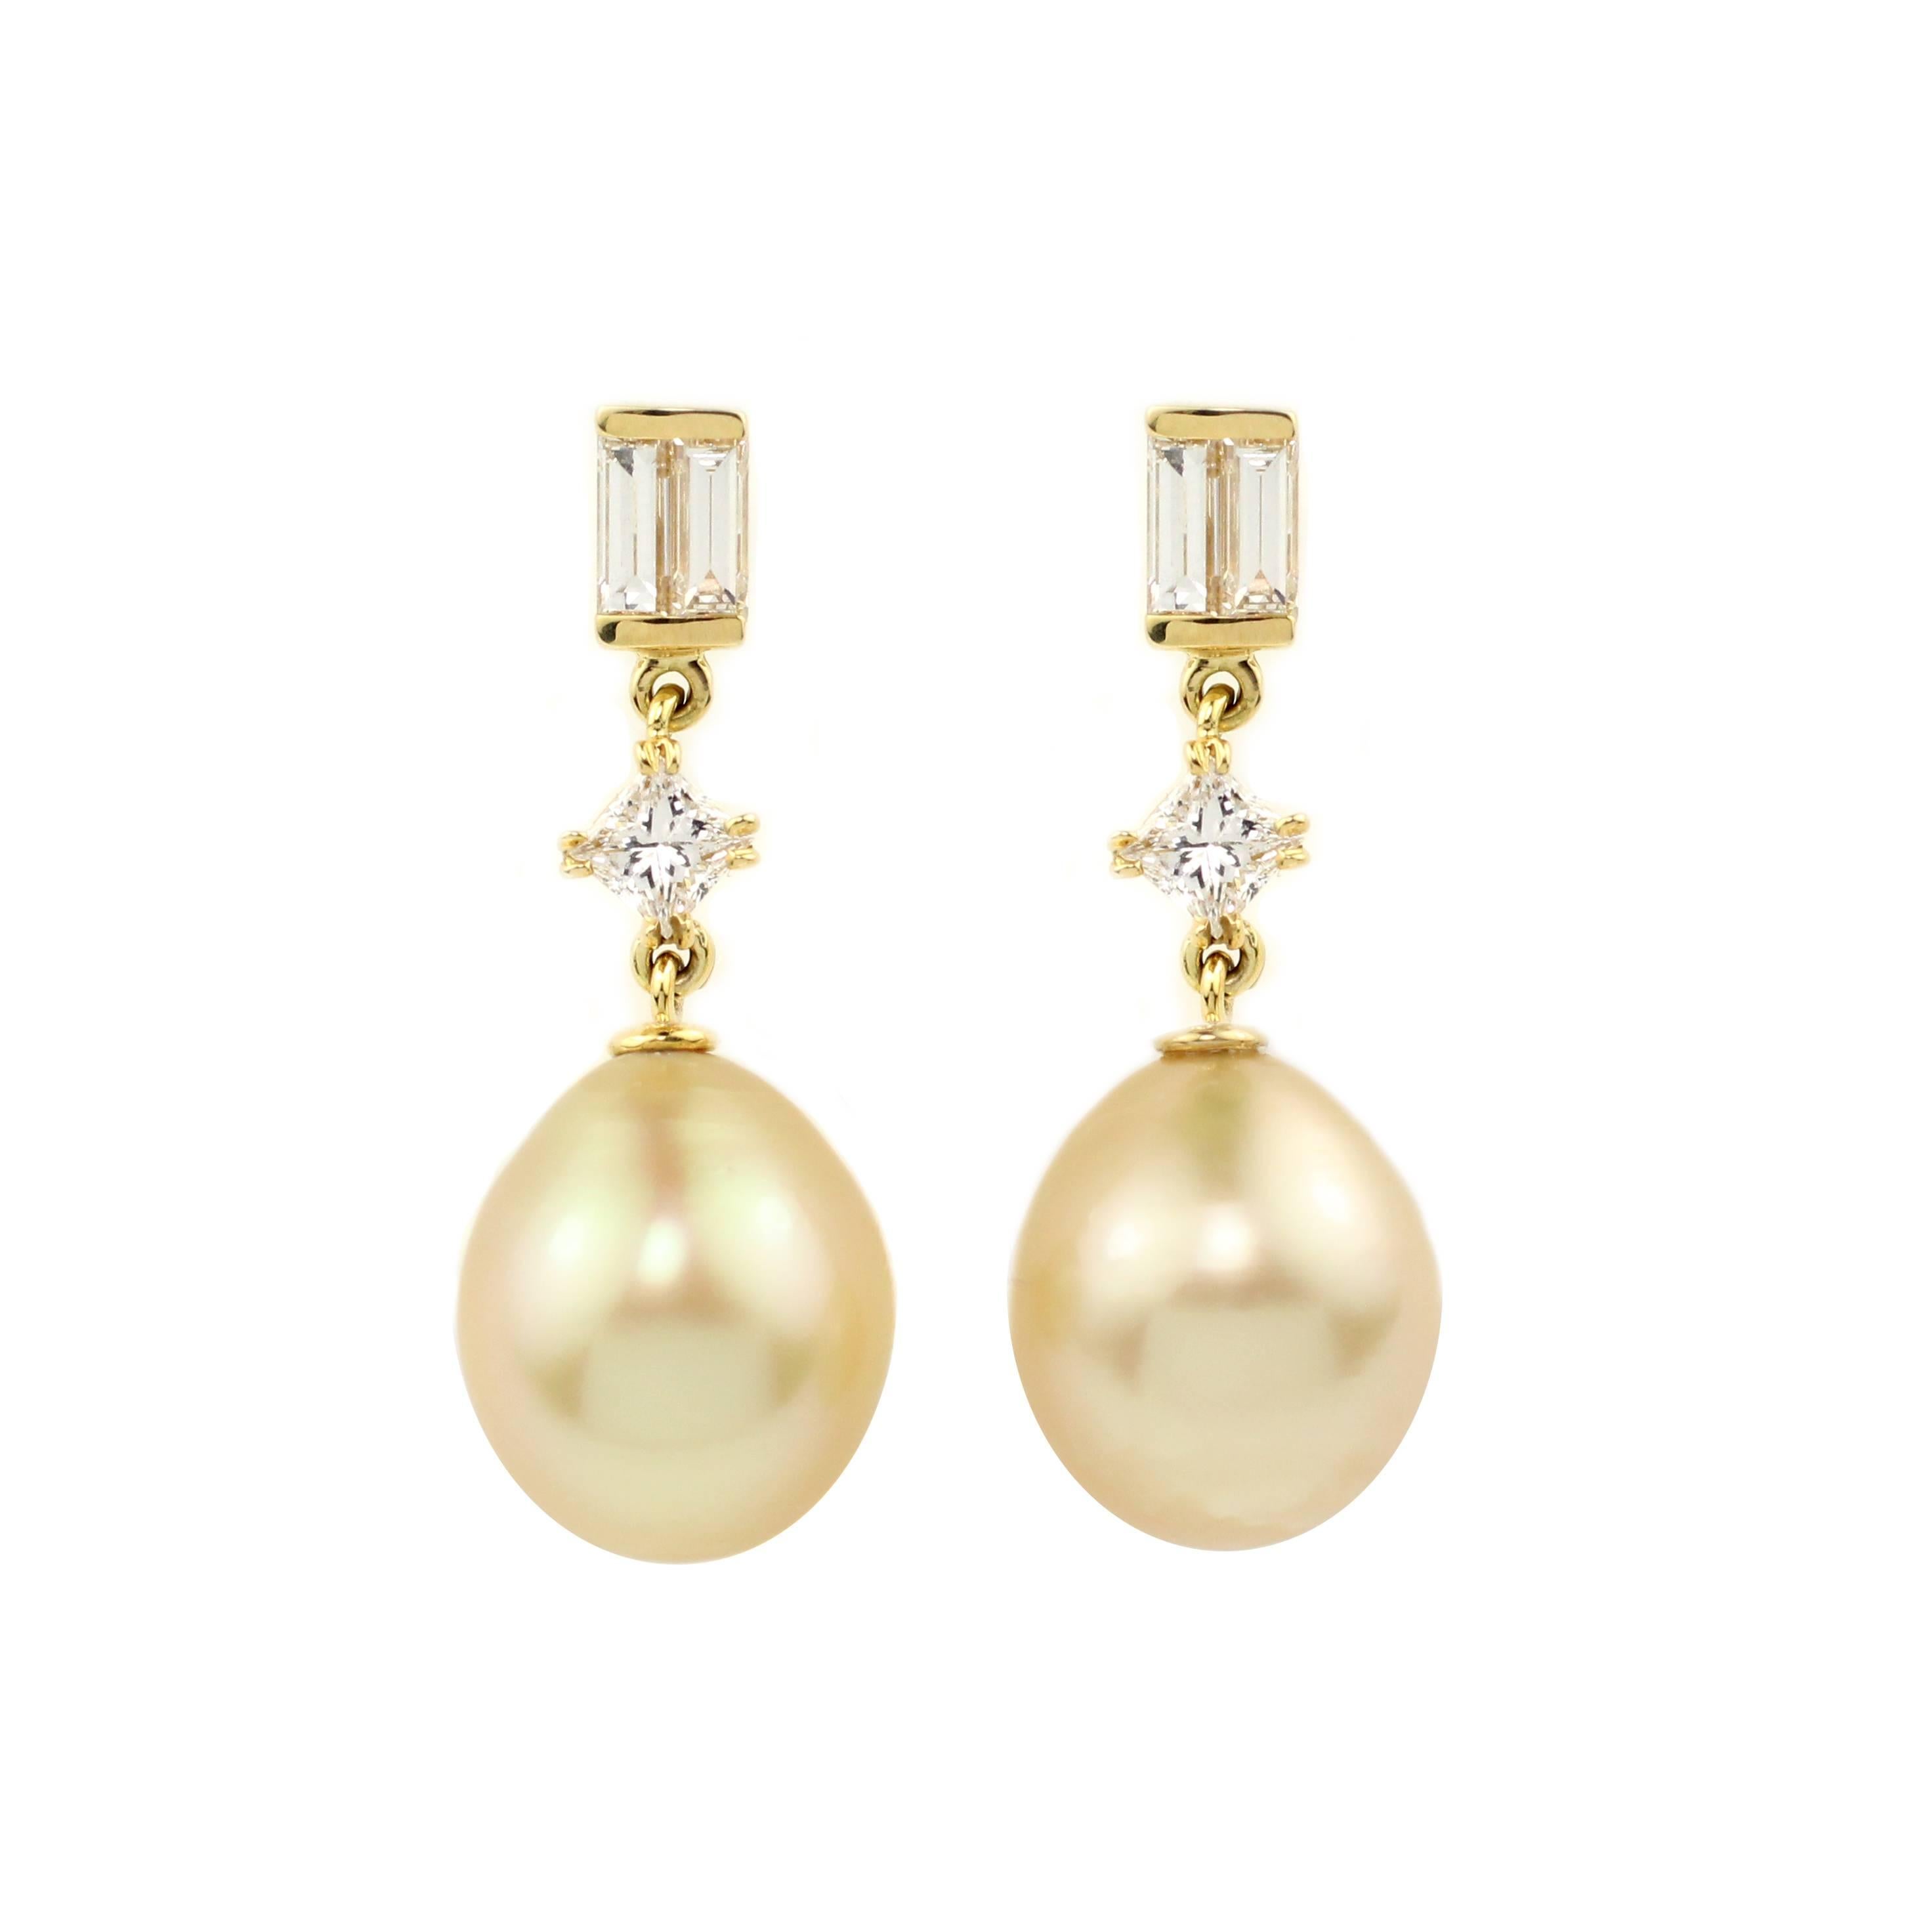 Julius Cohen Diamond and Golden Pearl Drop Earrings